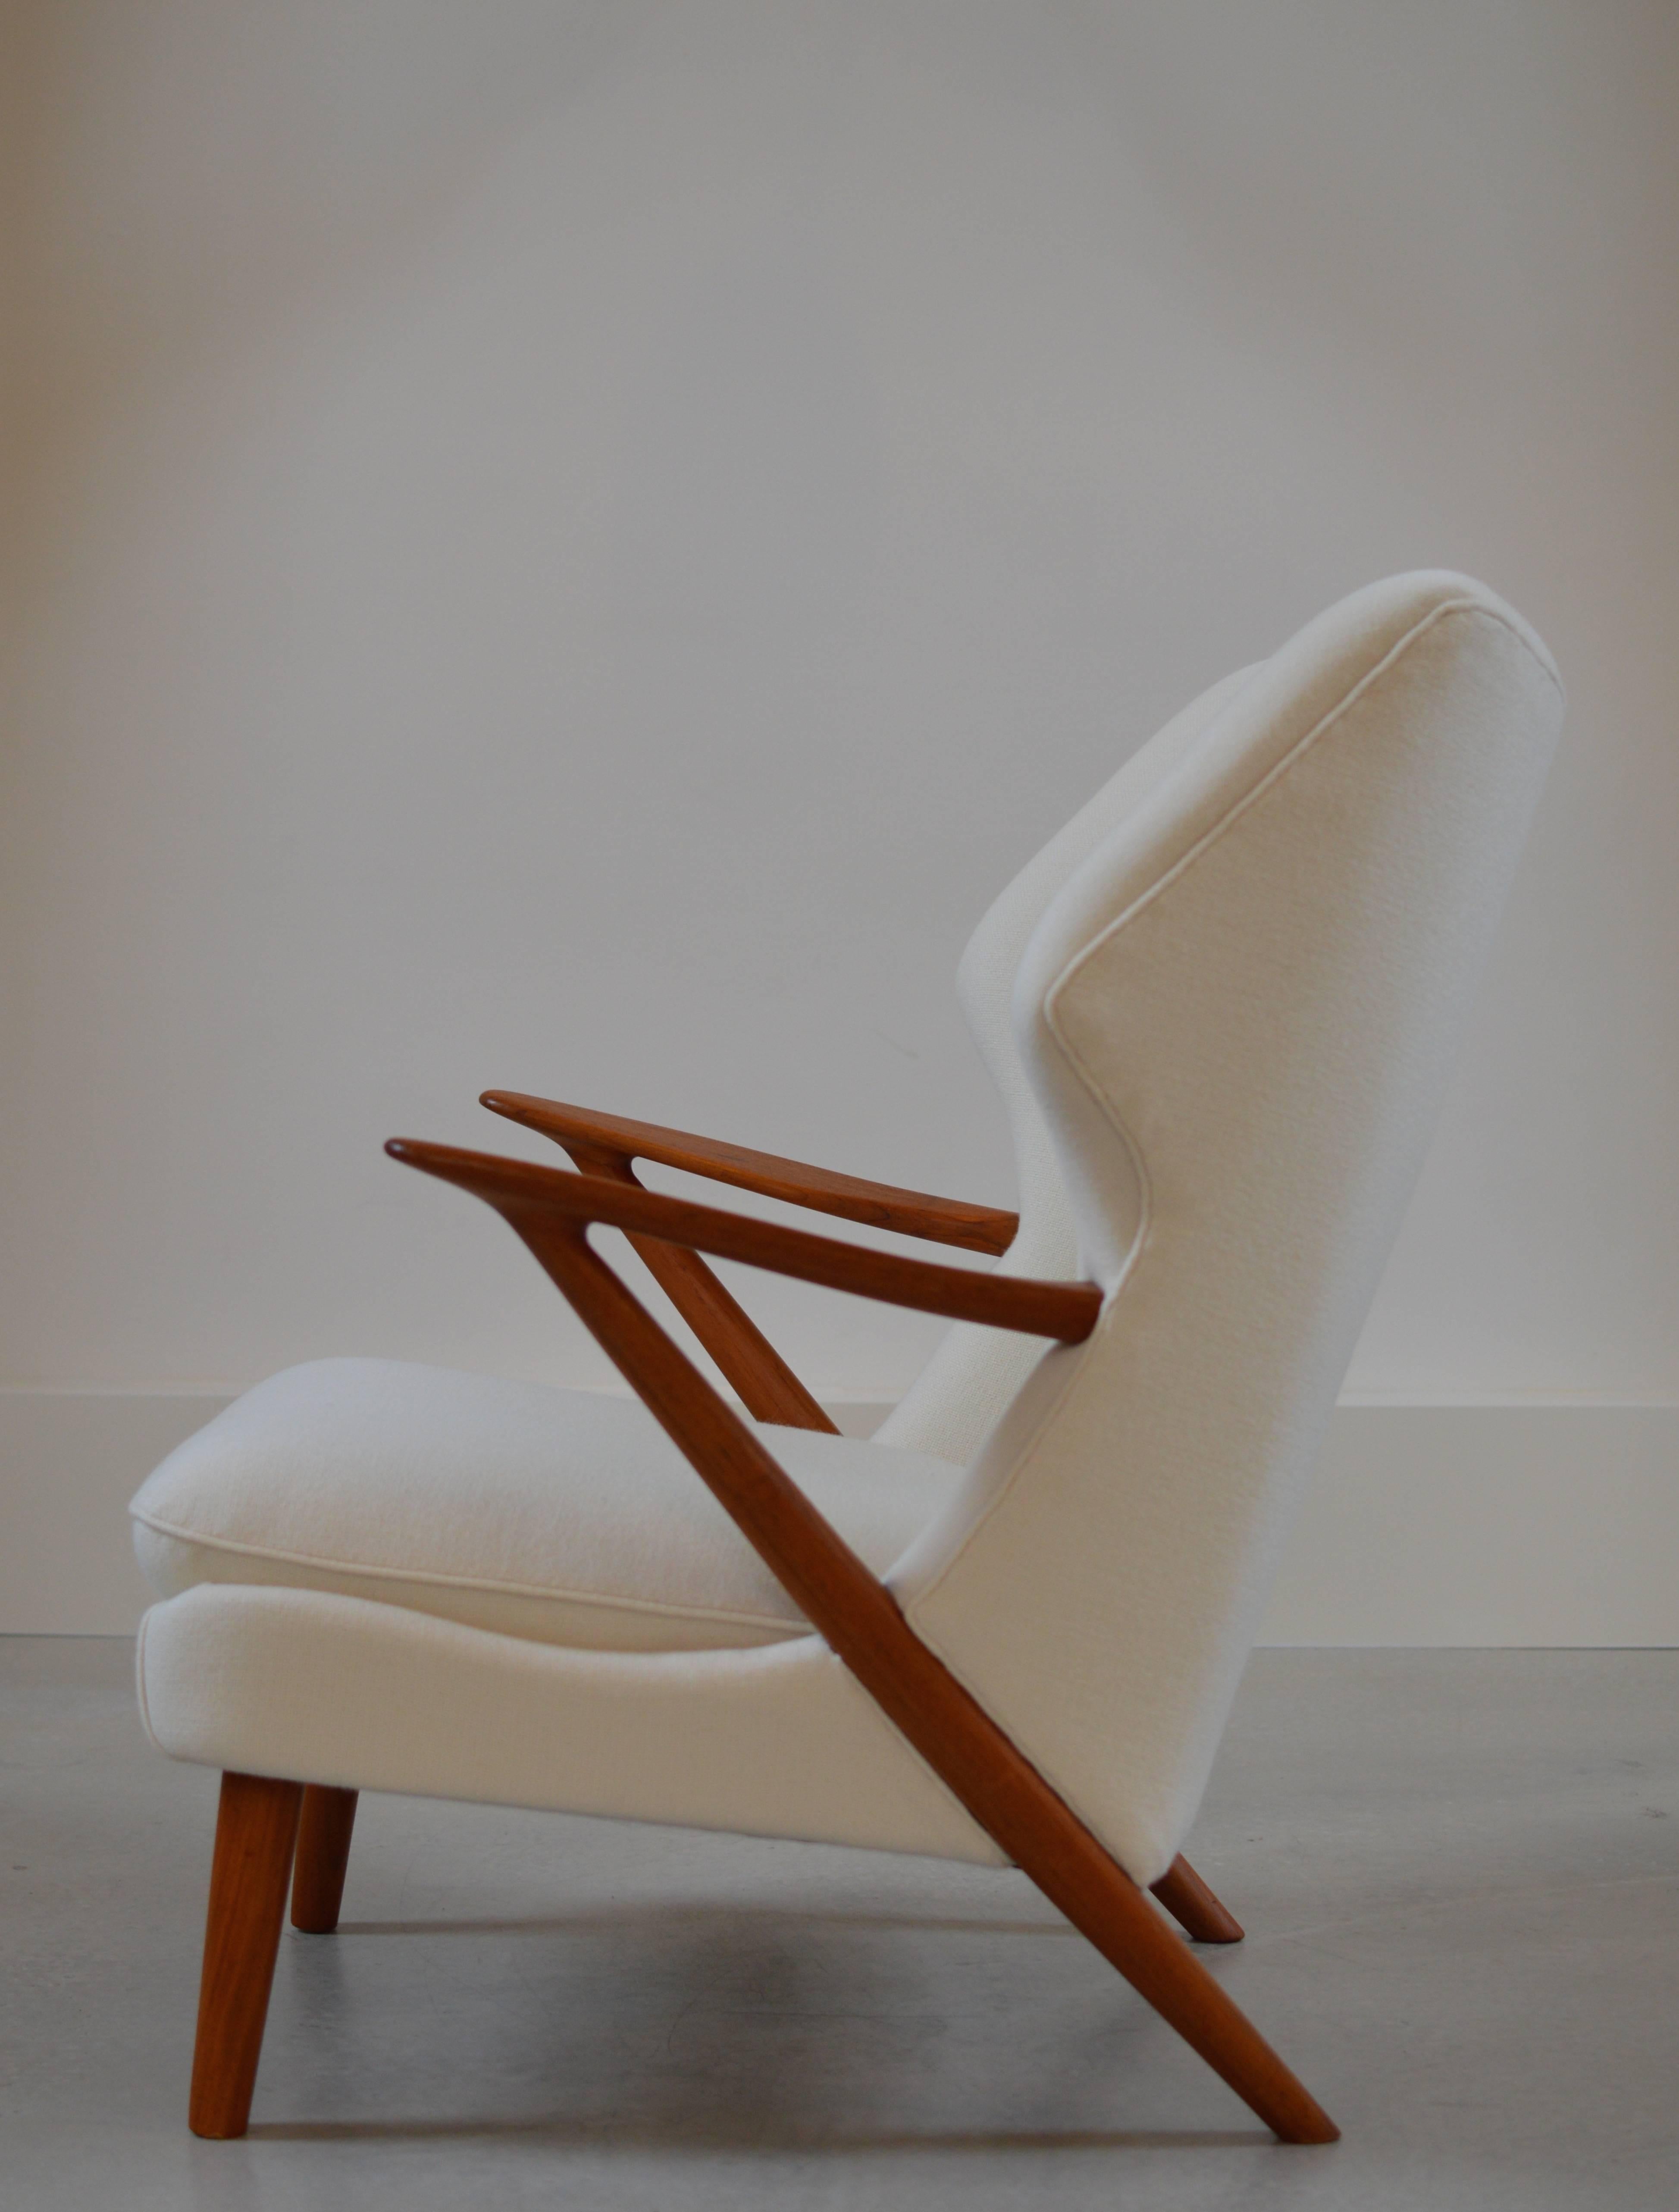 Danish Lounge Chair by Kurt Olsen from 1955